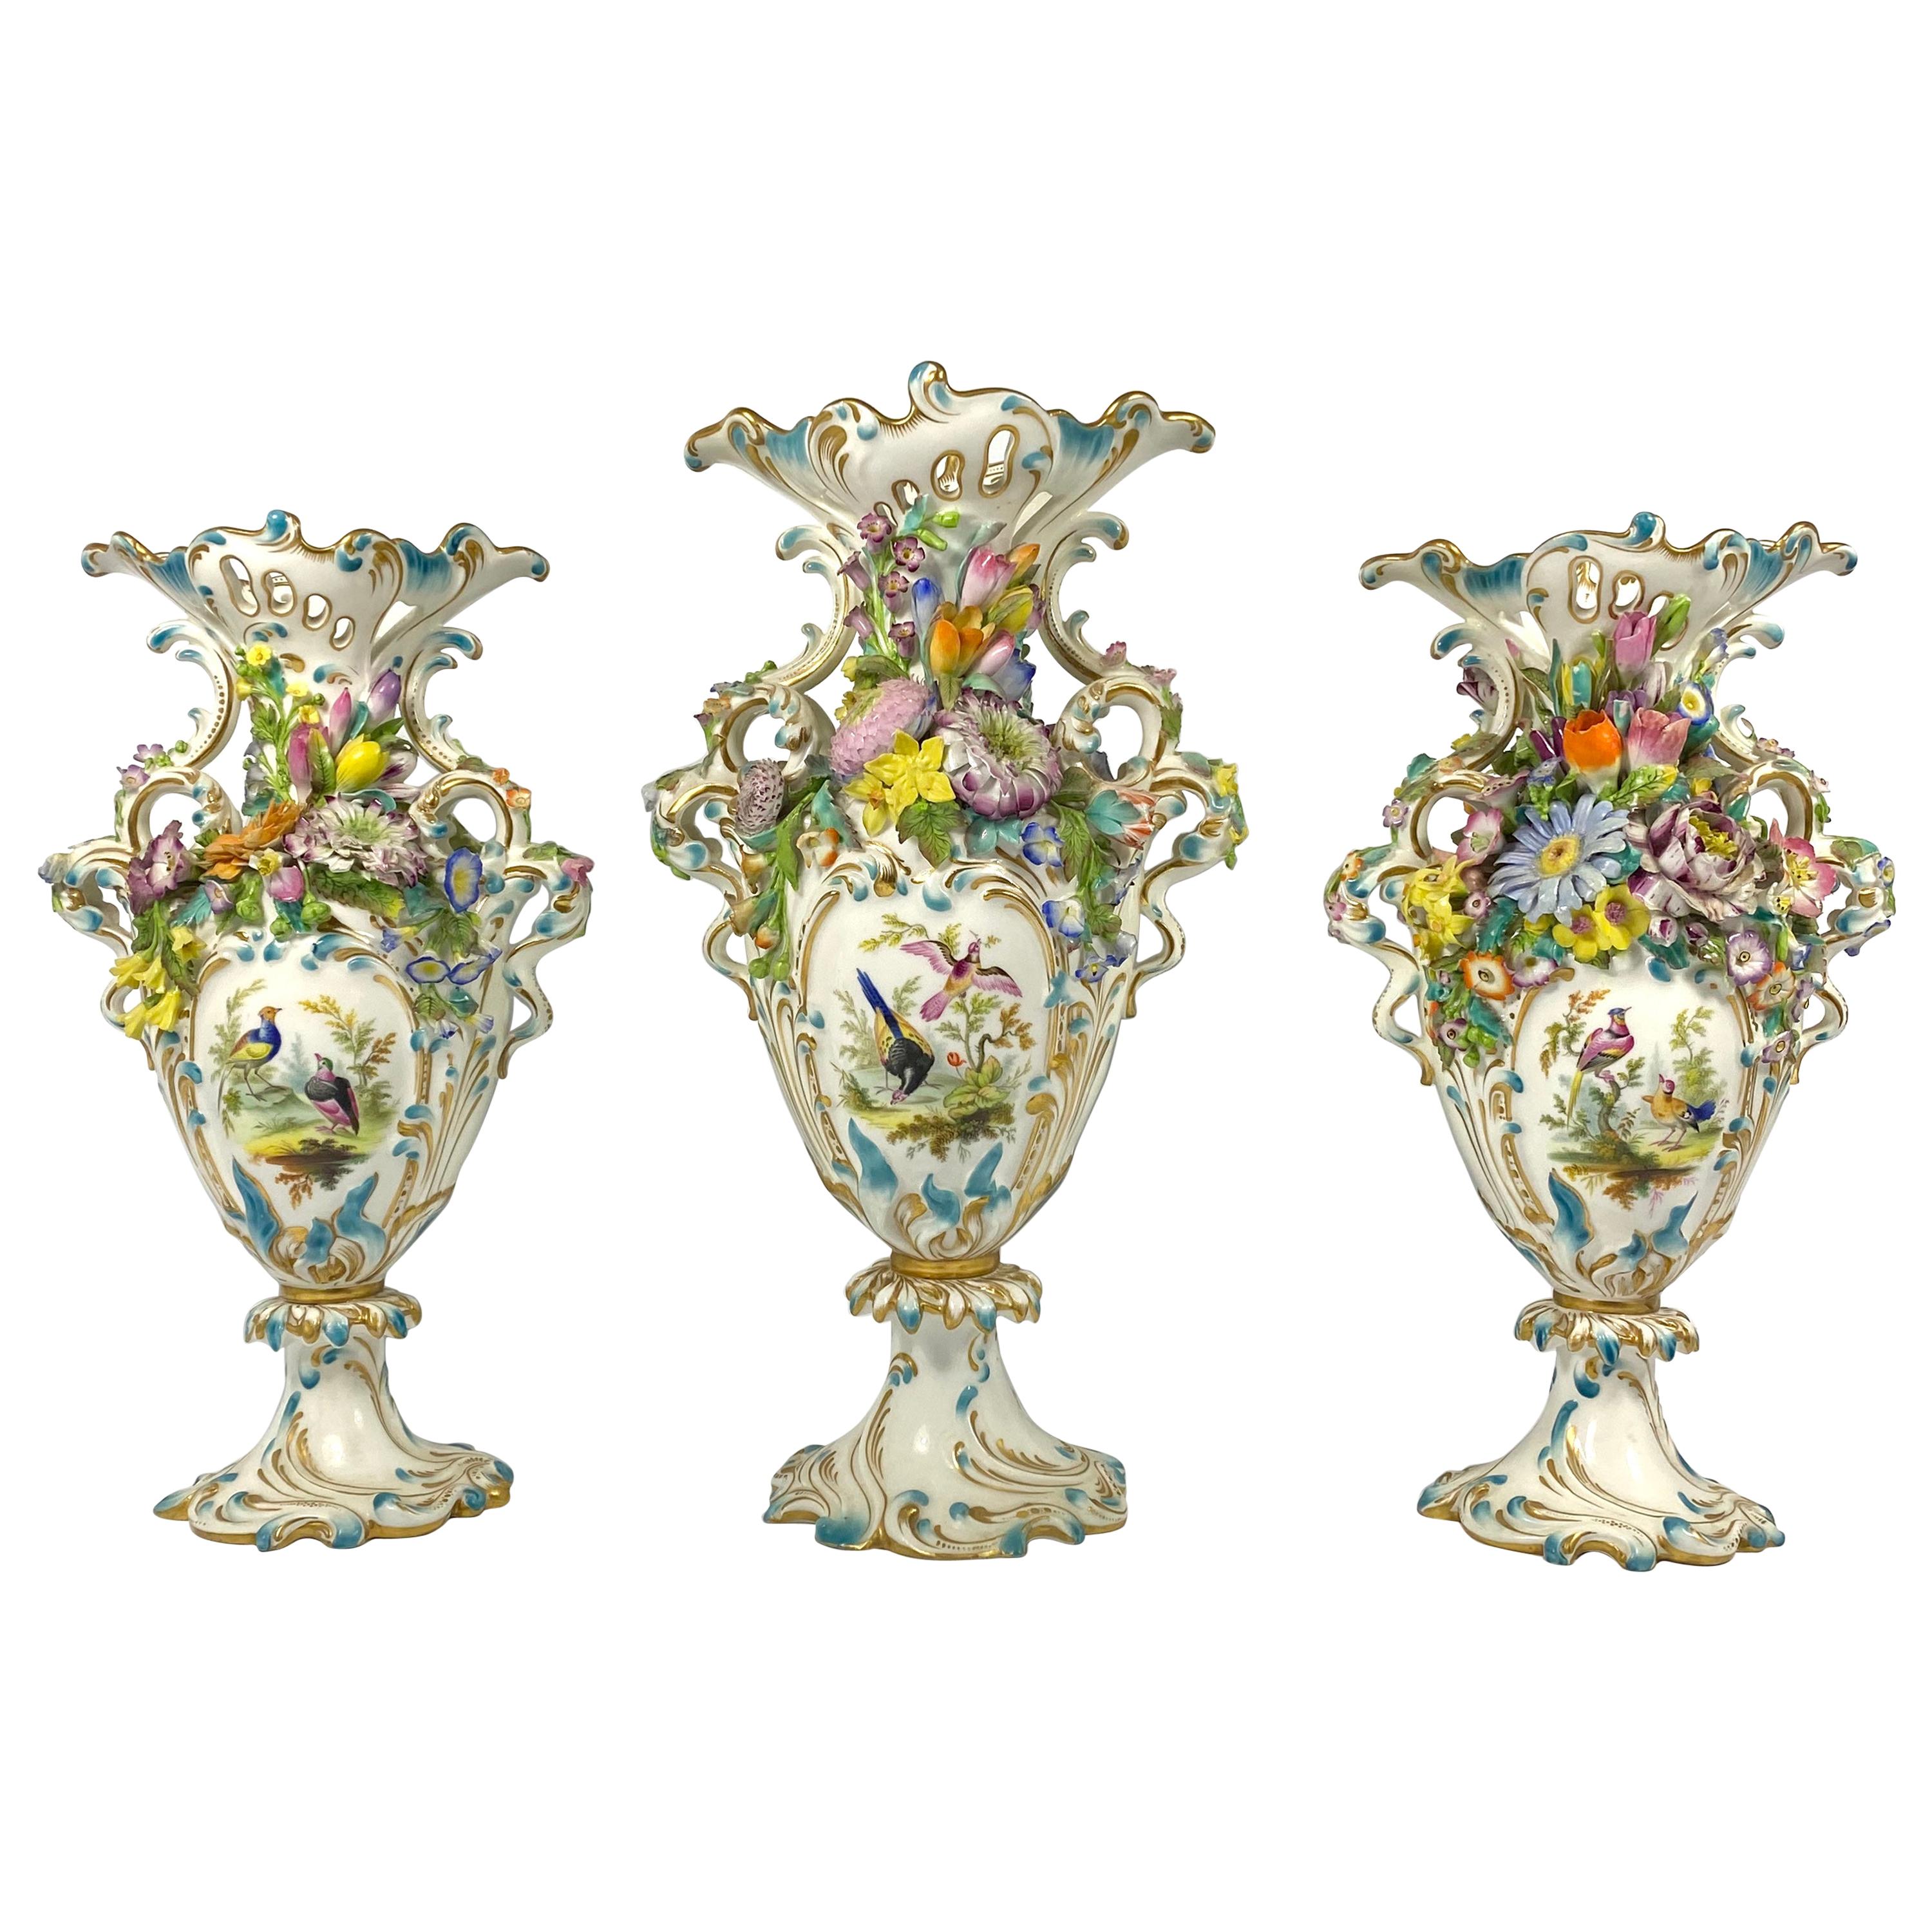 Garniture en porcelaine fine de Minton "incrustée de fleurs", vers 1830